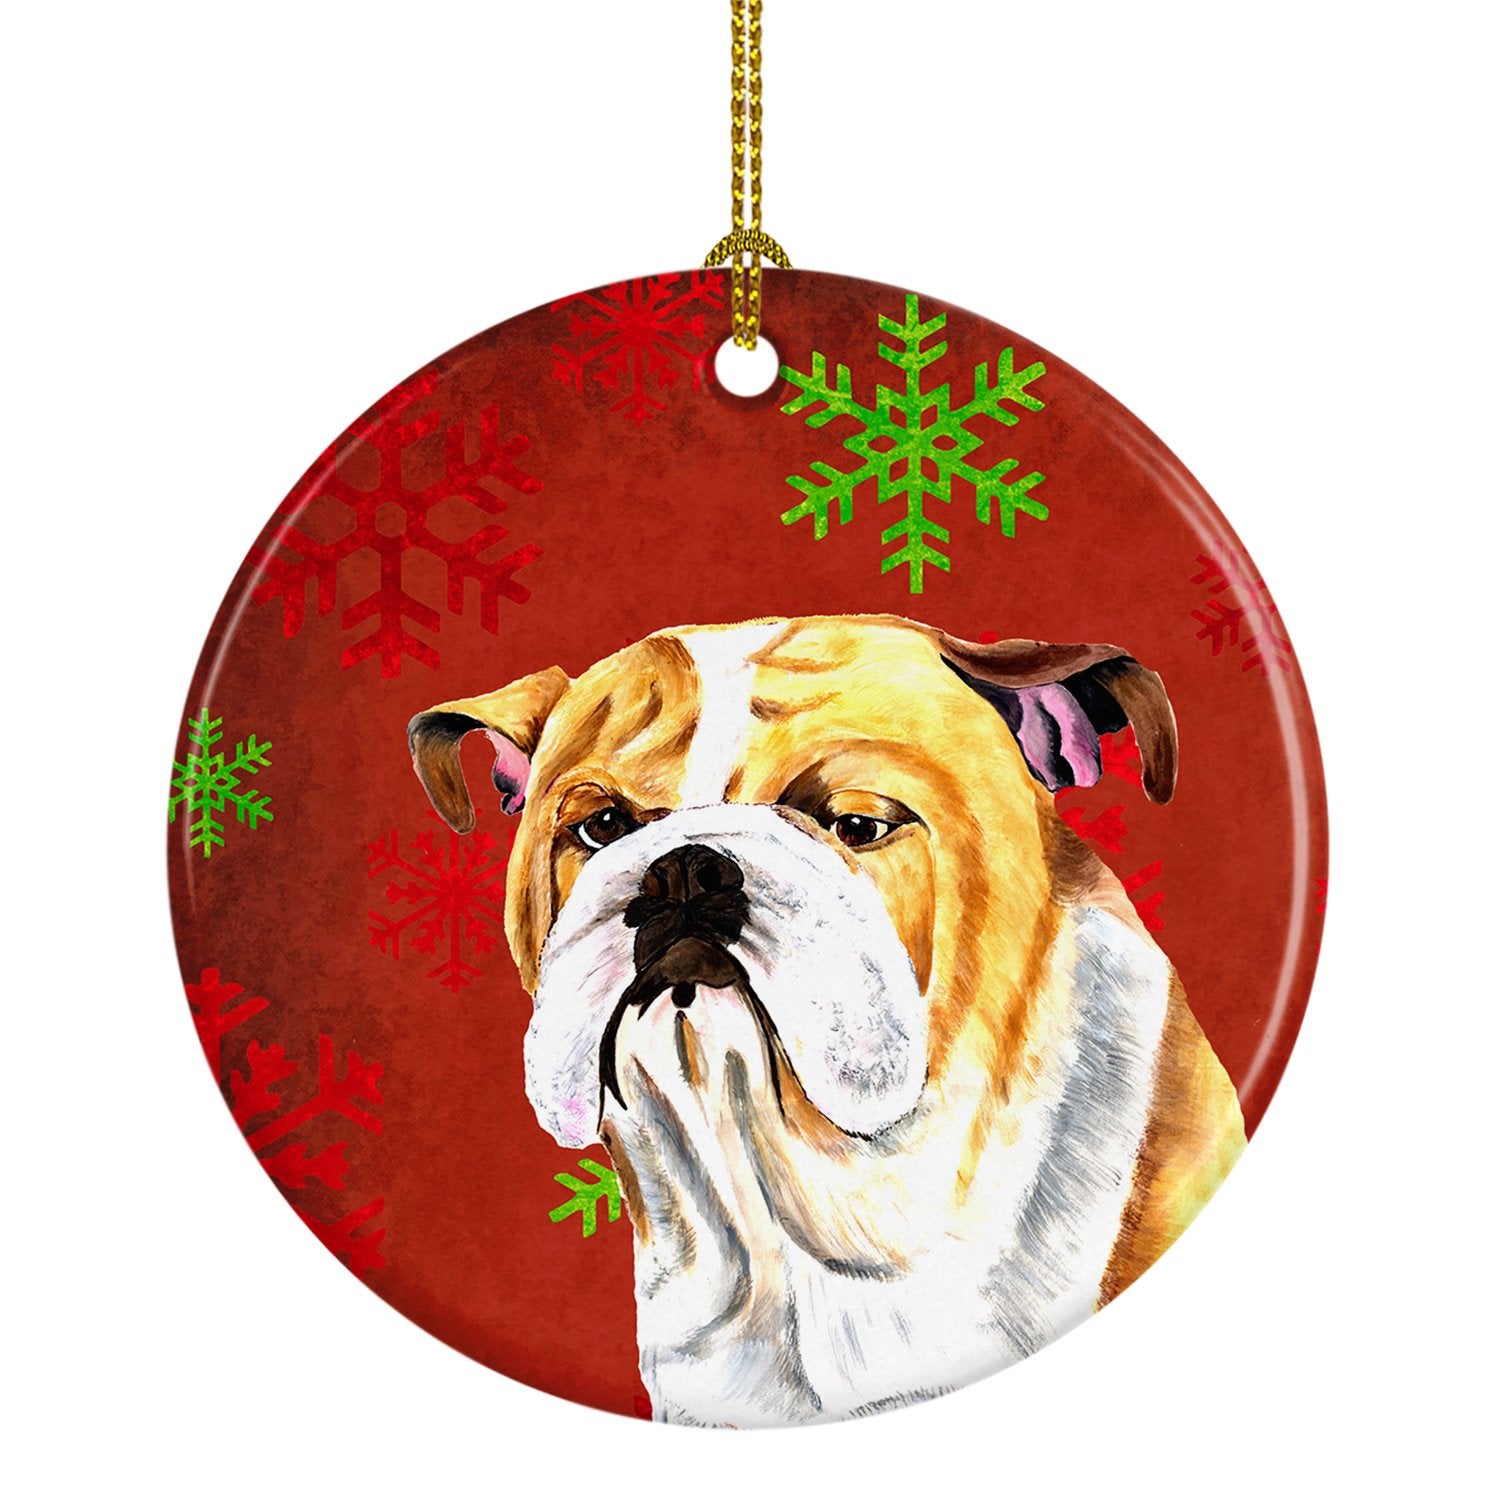 Bulldog English Red Snowflakes Holiday Christmas Ceramic Ornament SC9414 by Caroline's Treasures